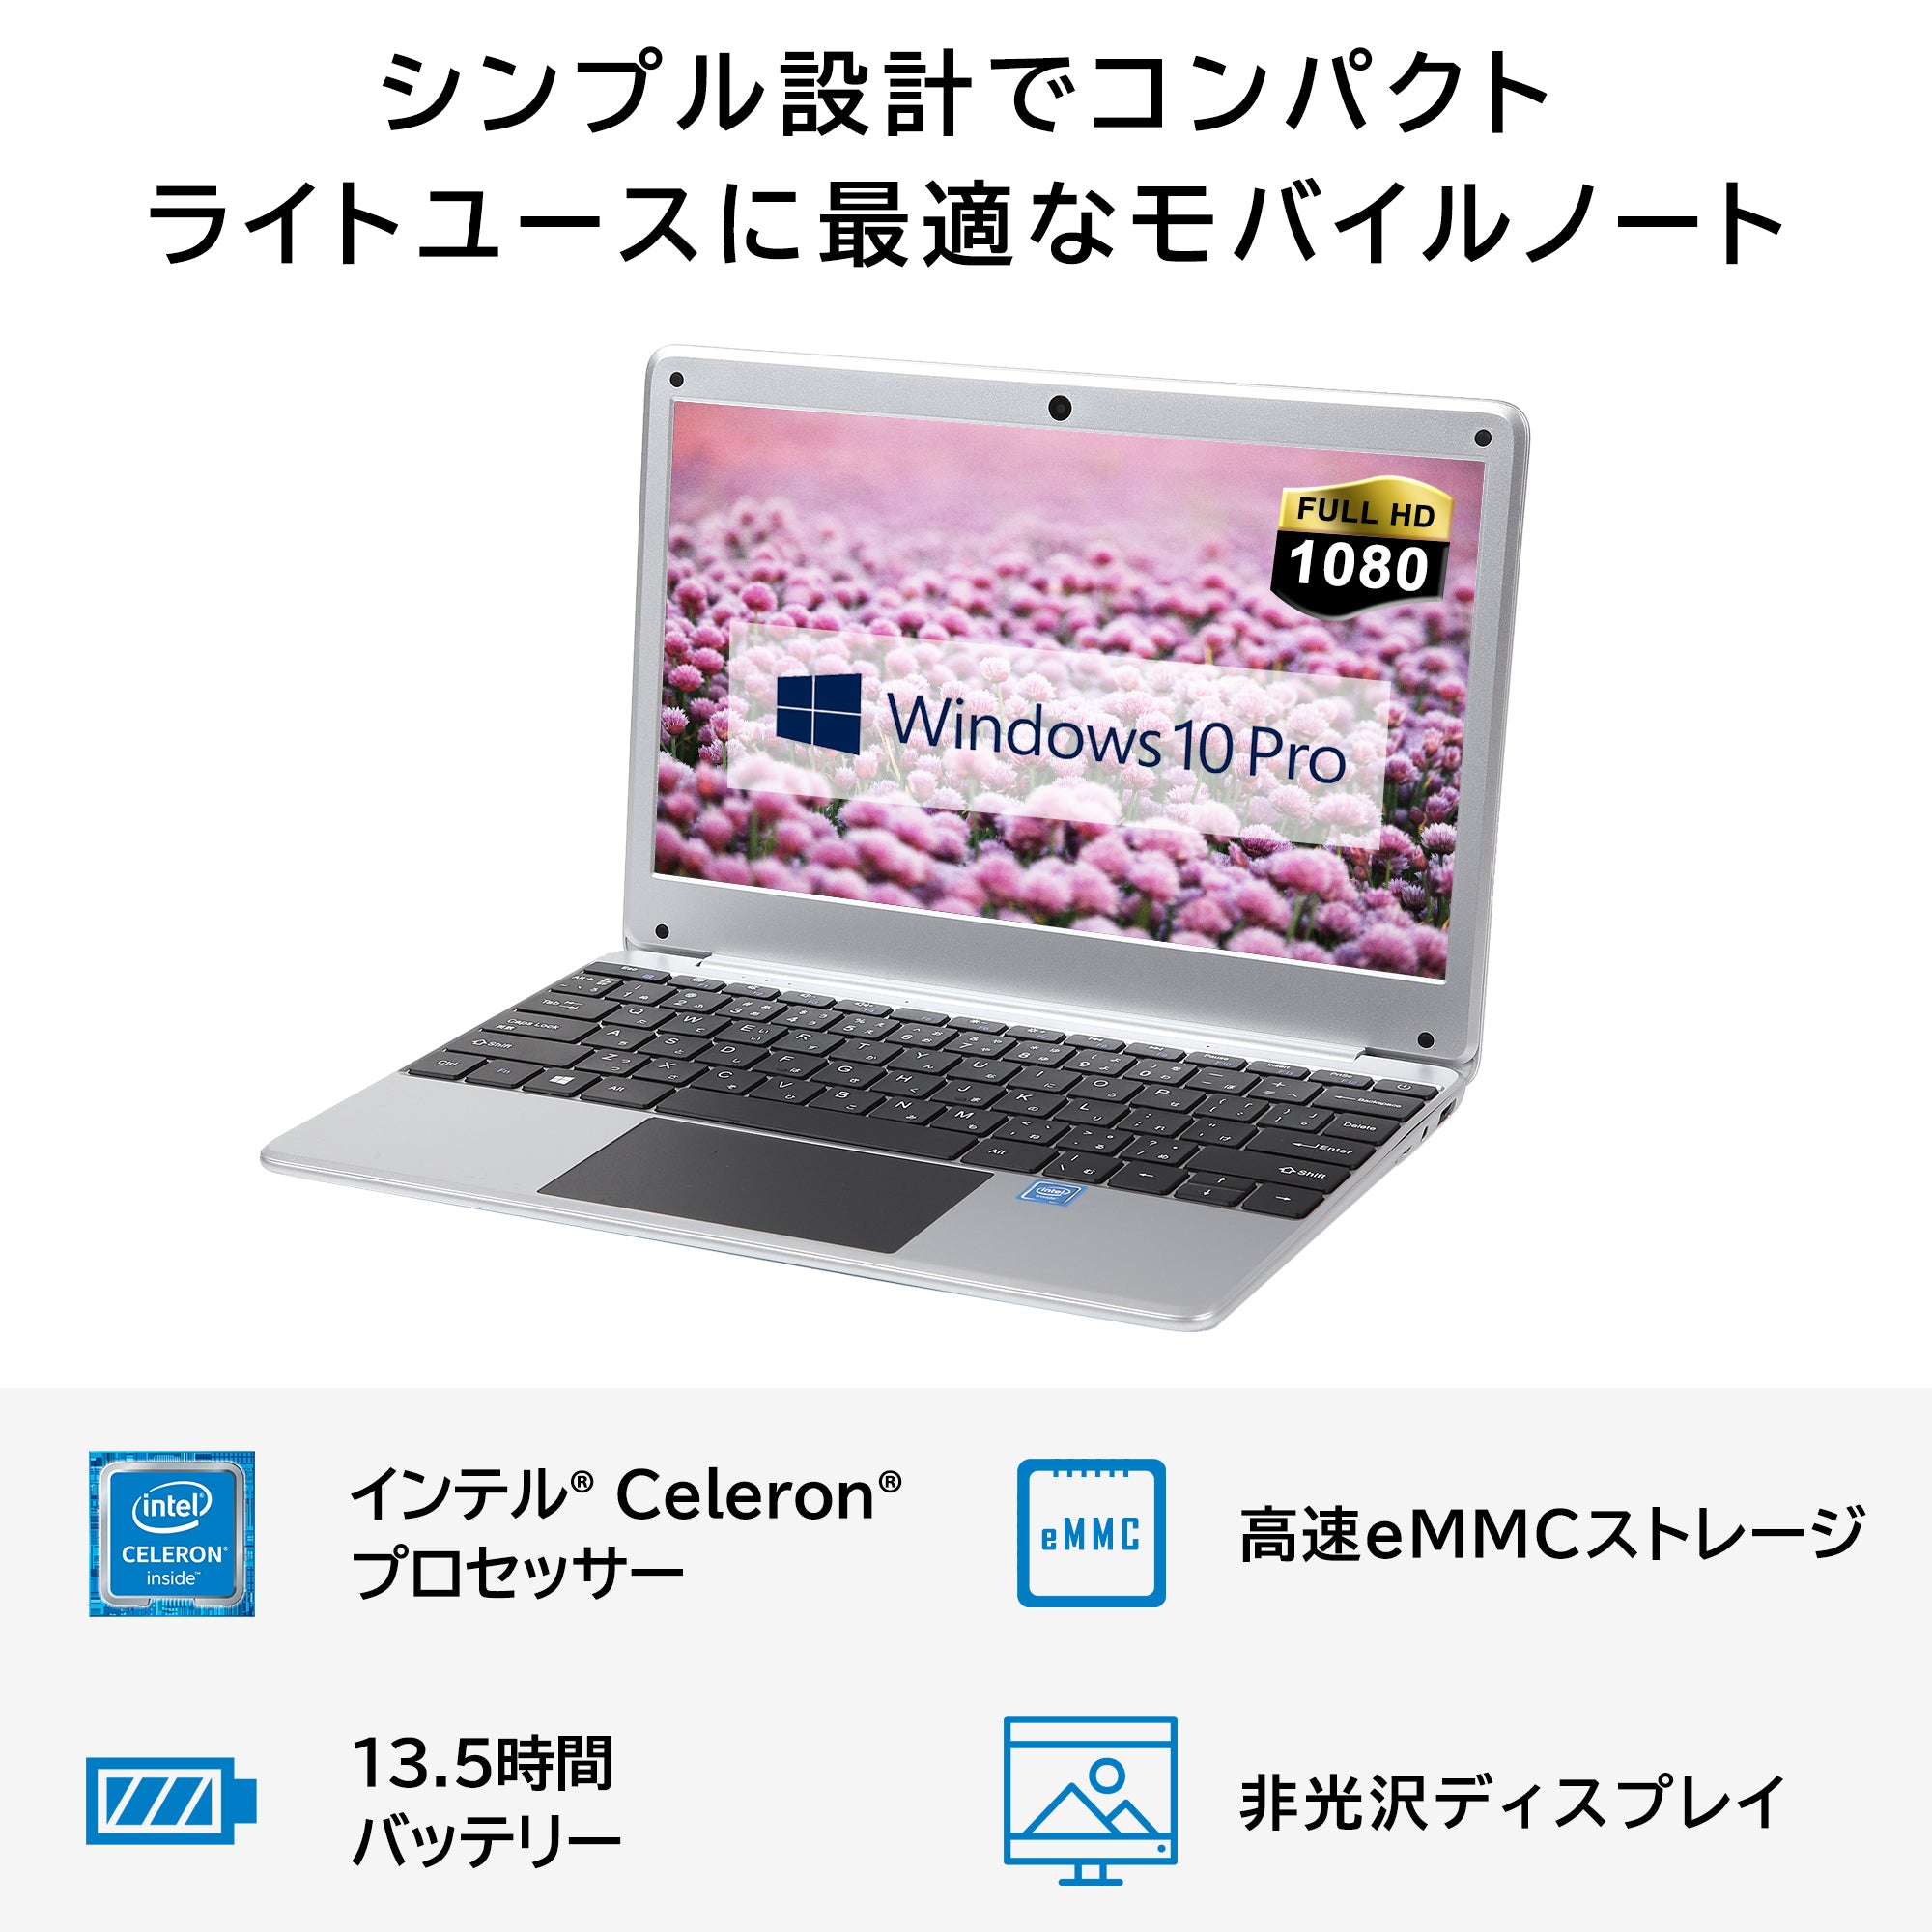 TENKU ComfortBook S11 Windows 10Pro搭載 Full HDモニター